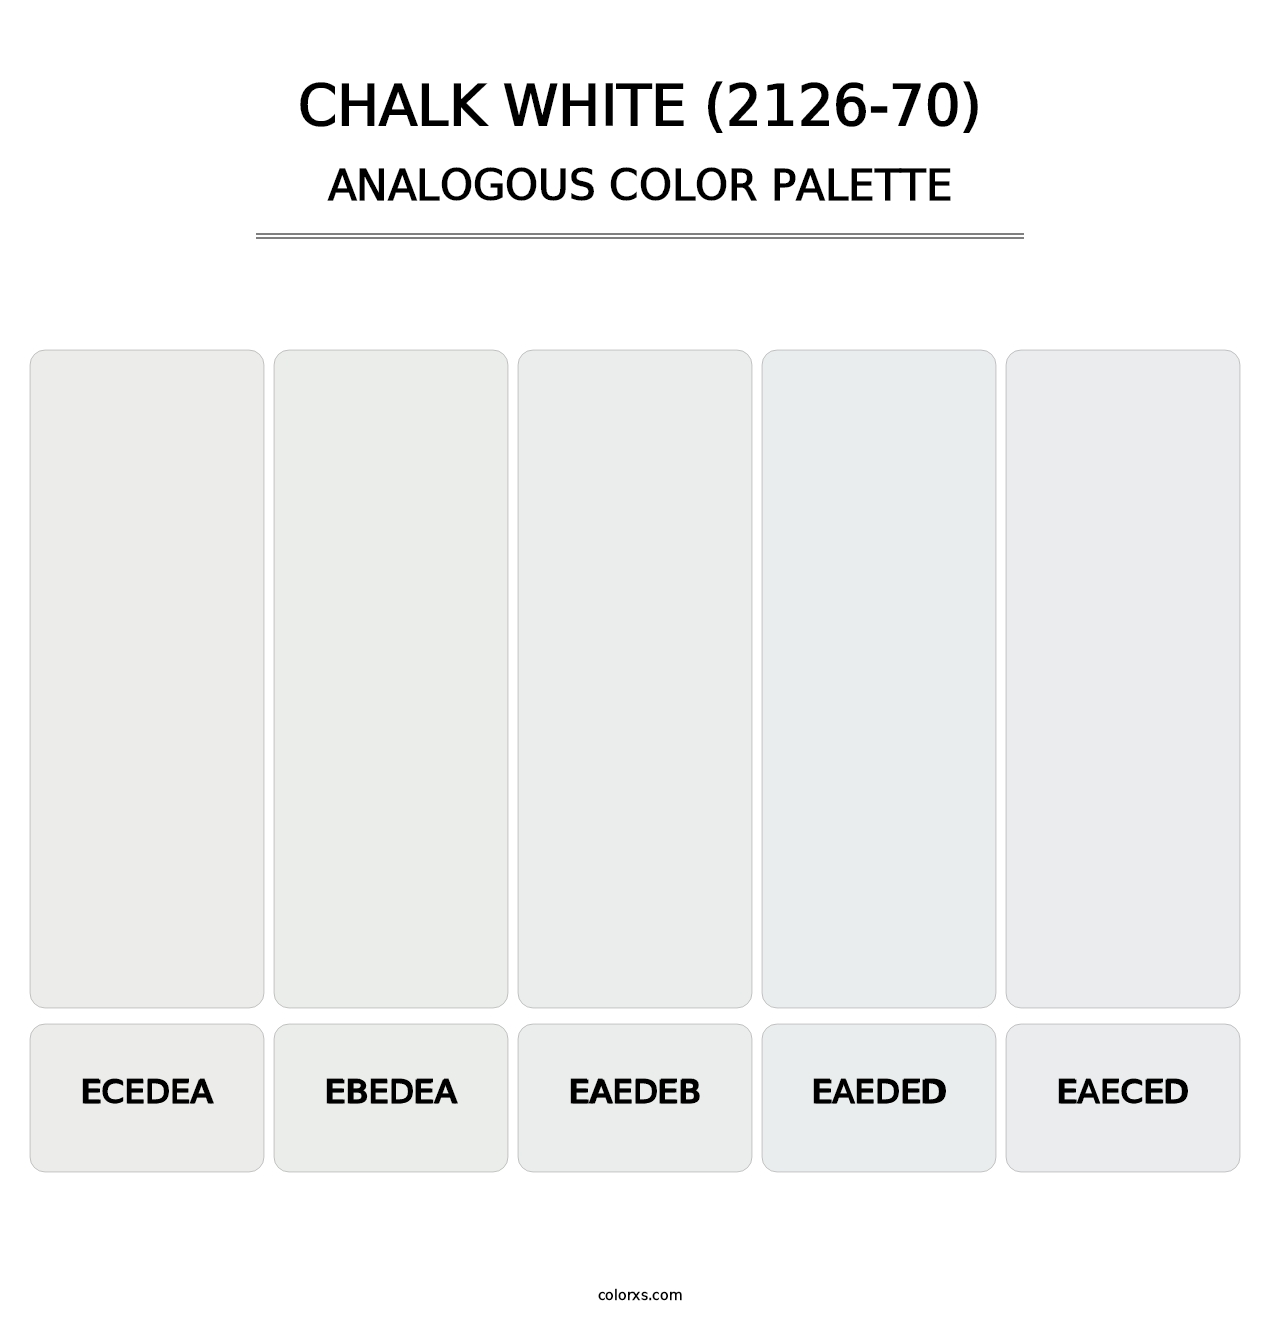 Chalk White (2126-70) - Analogous Color Palette